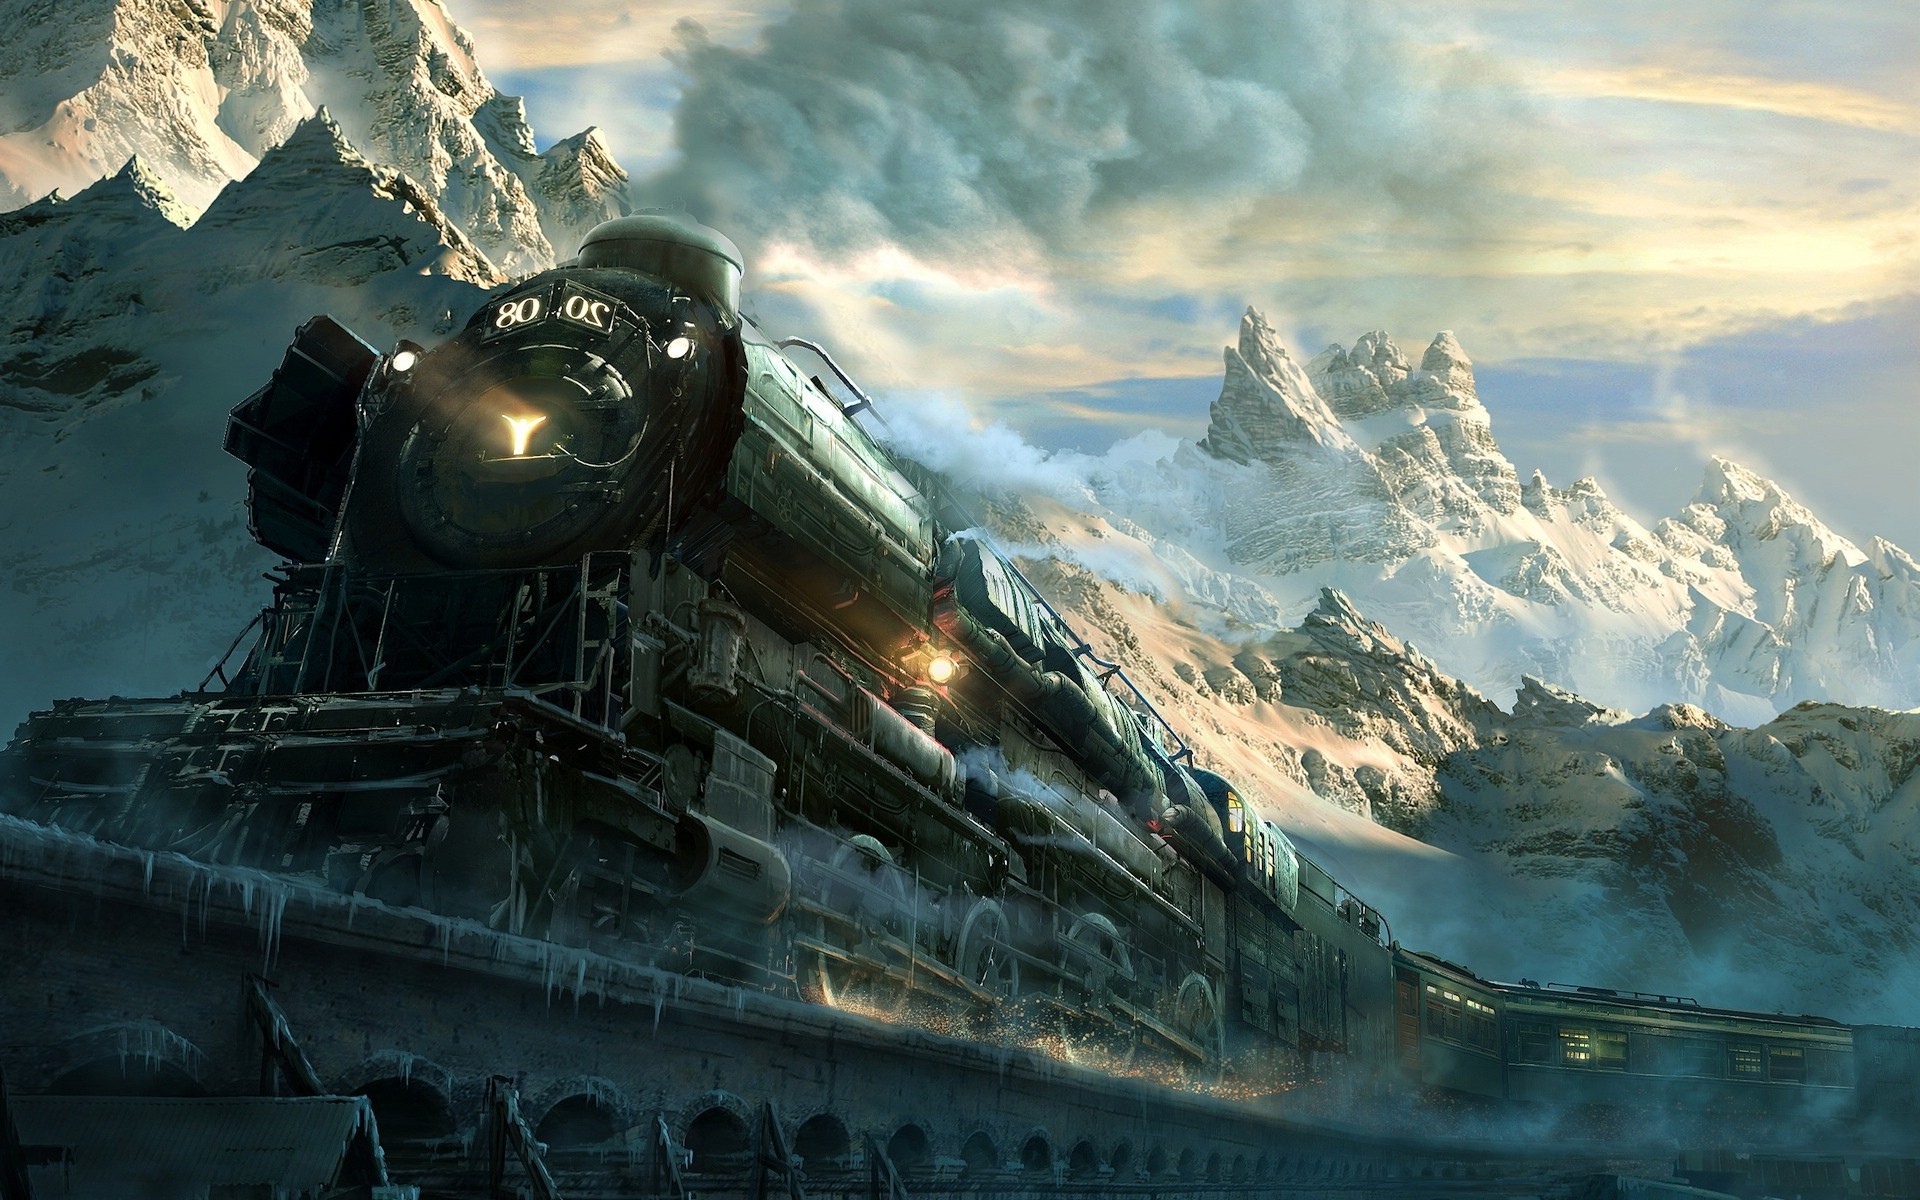 Mountain and Train Art 4K wallpaper  Cool backgrounds, Backgrounds desktop,  Art wallpaper